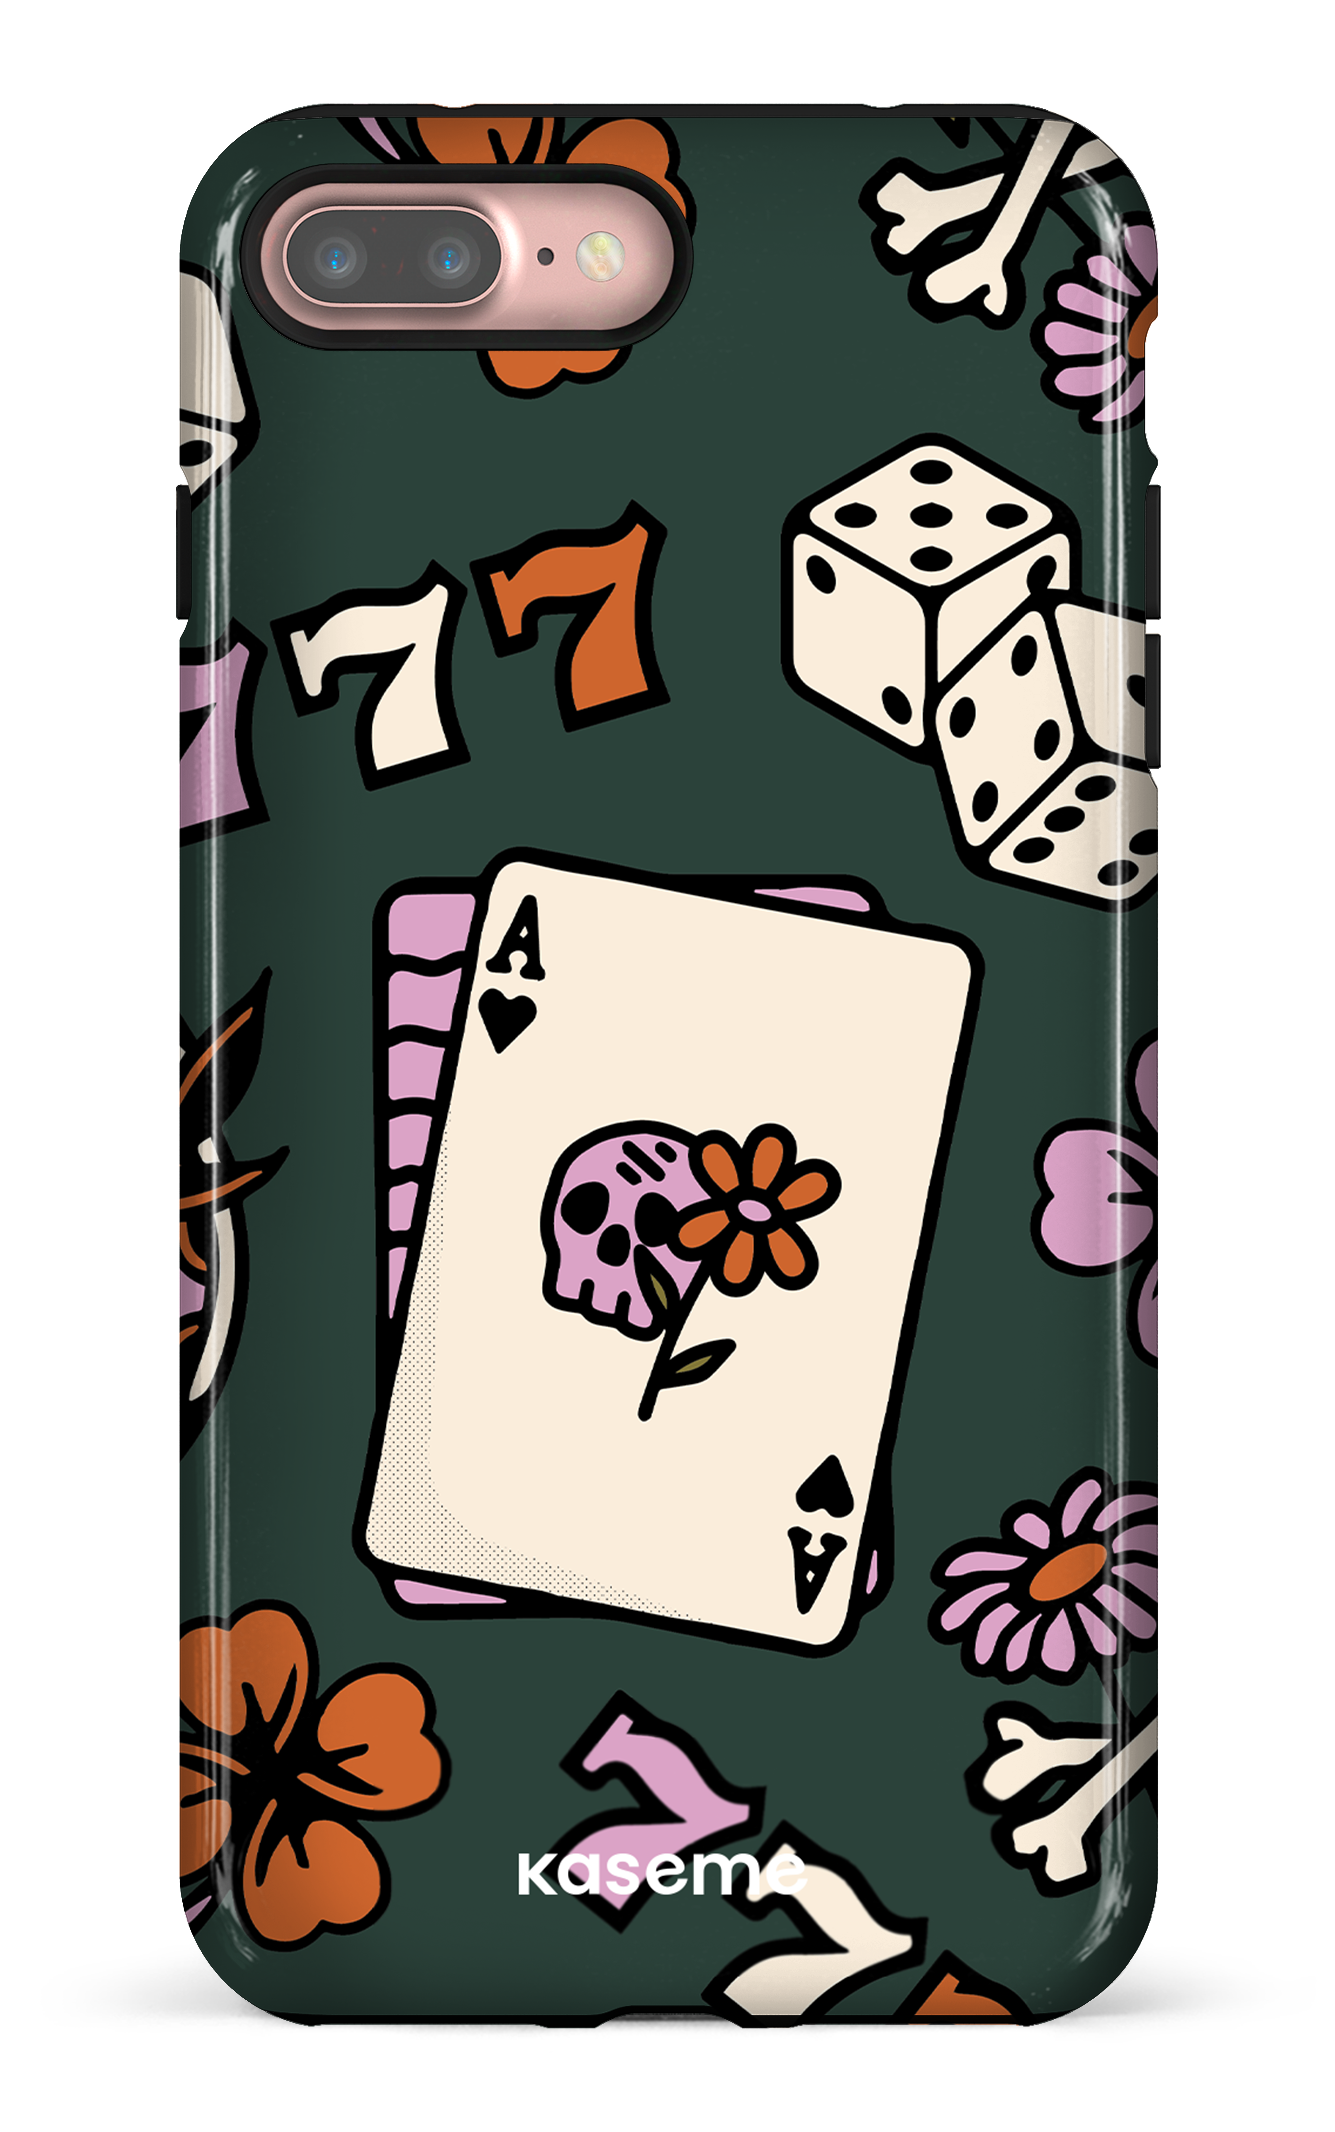 Poker Face - iPhone 7 Plus